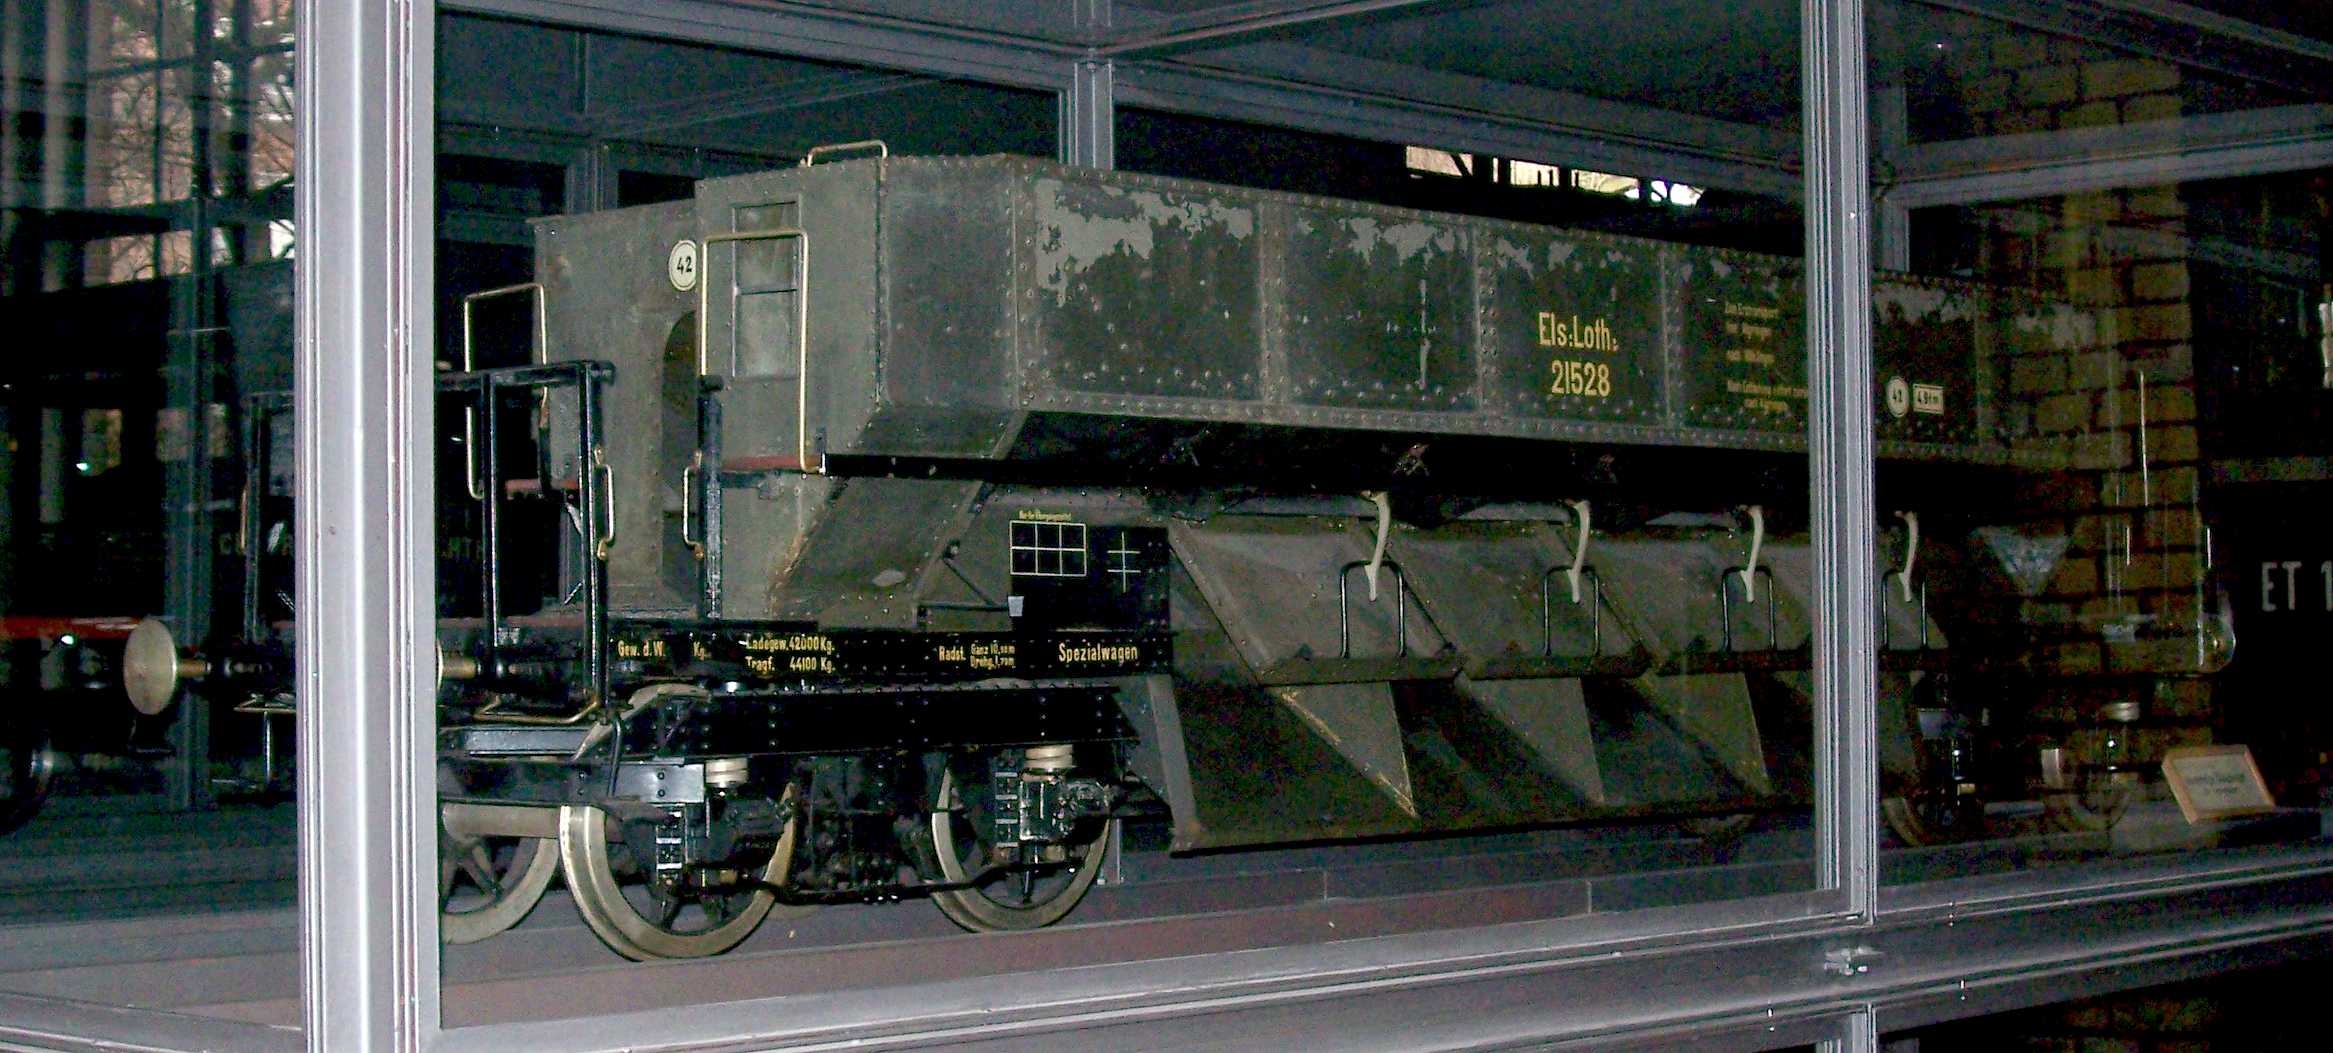 Erztransportwagen "Els. Lothr. 21528", Modell 1:5 (Stiftung Deutsches Technikmuseum Berlin CC0)